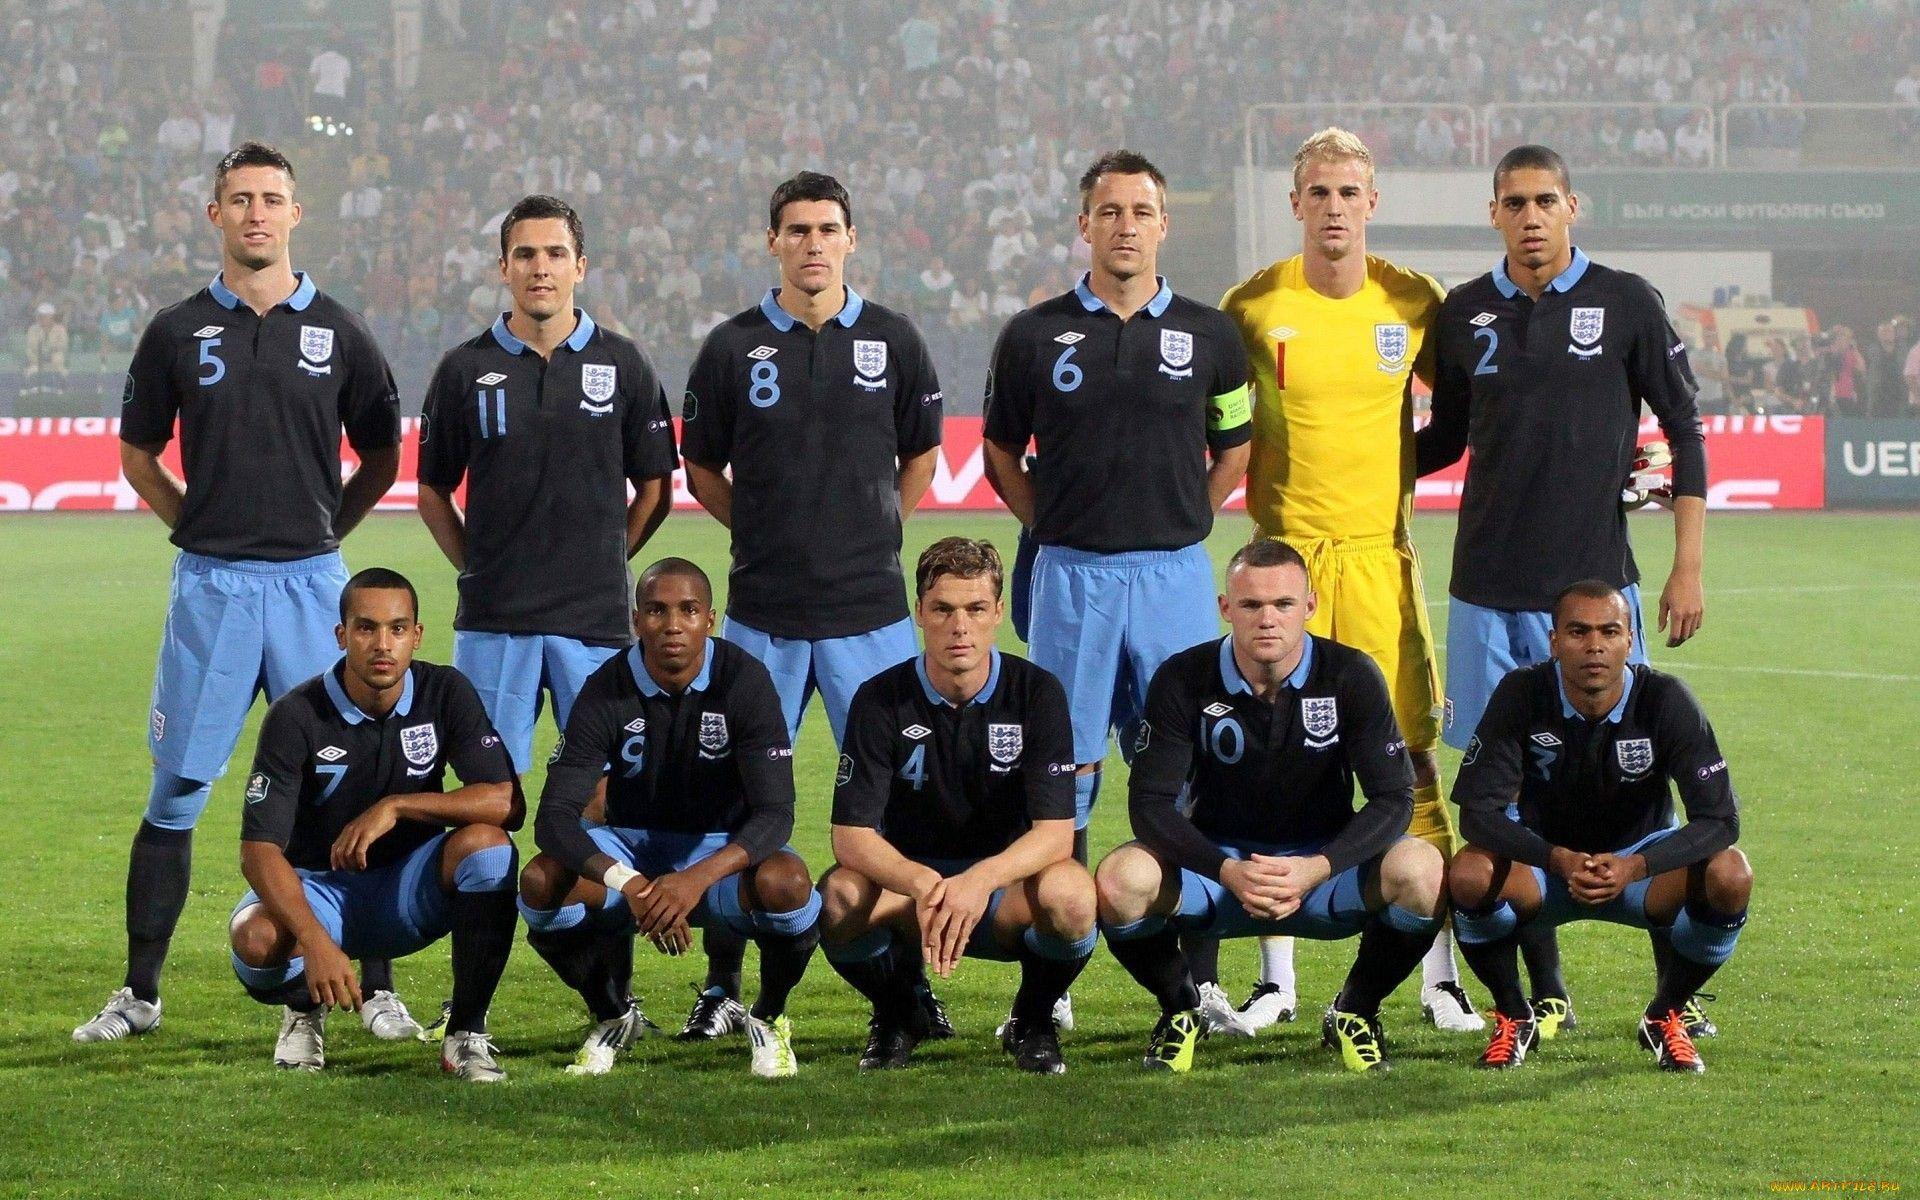 England Soccer Team Wallpaper In Hd